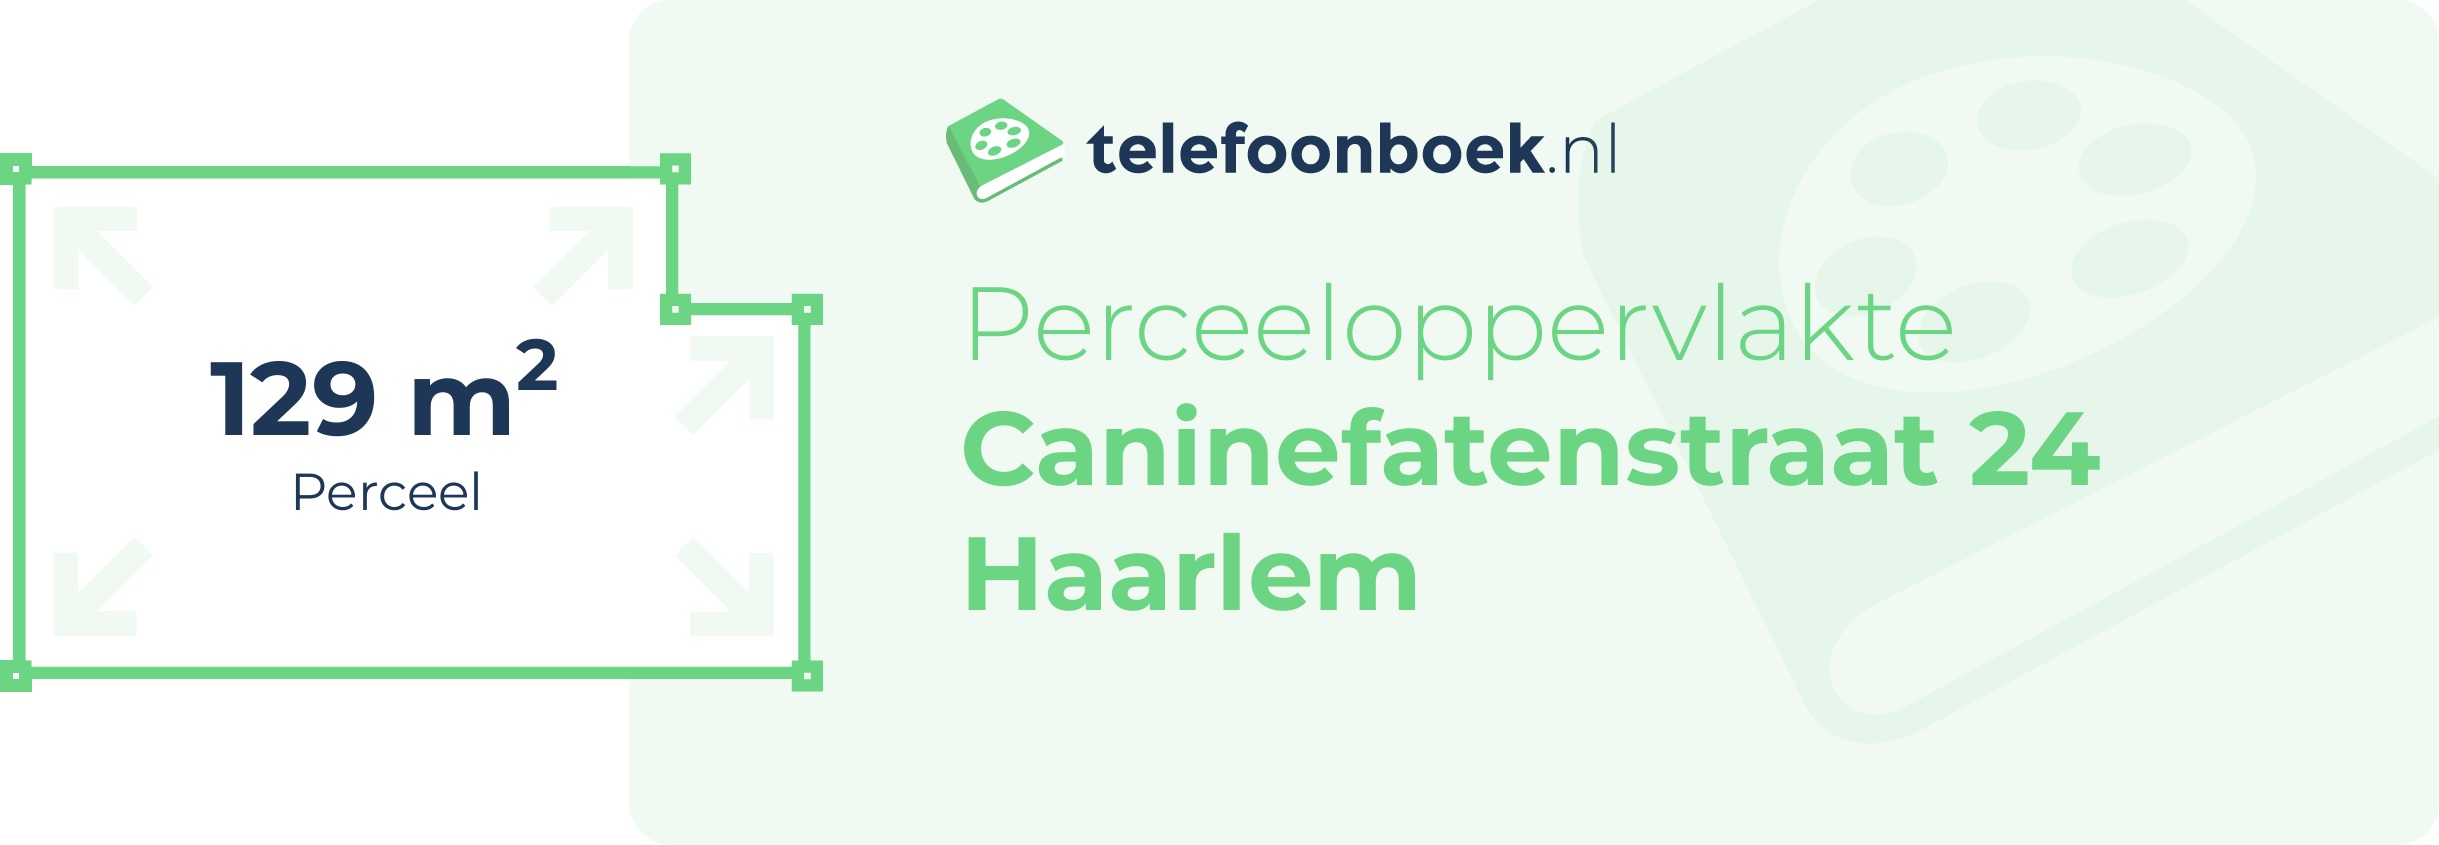 Perceeloppervlakte Caninefatenstraat 24 Haarlem